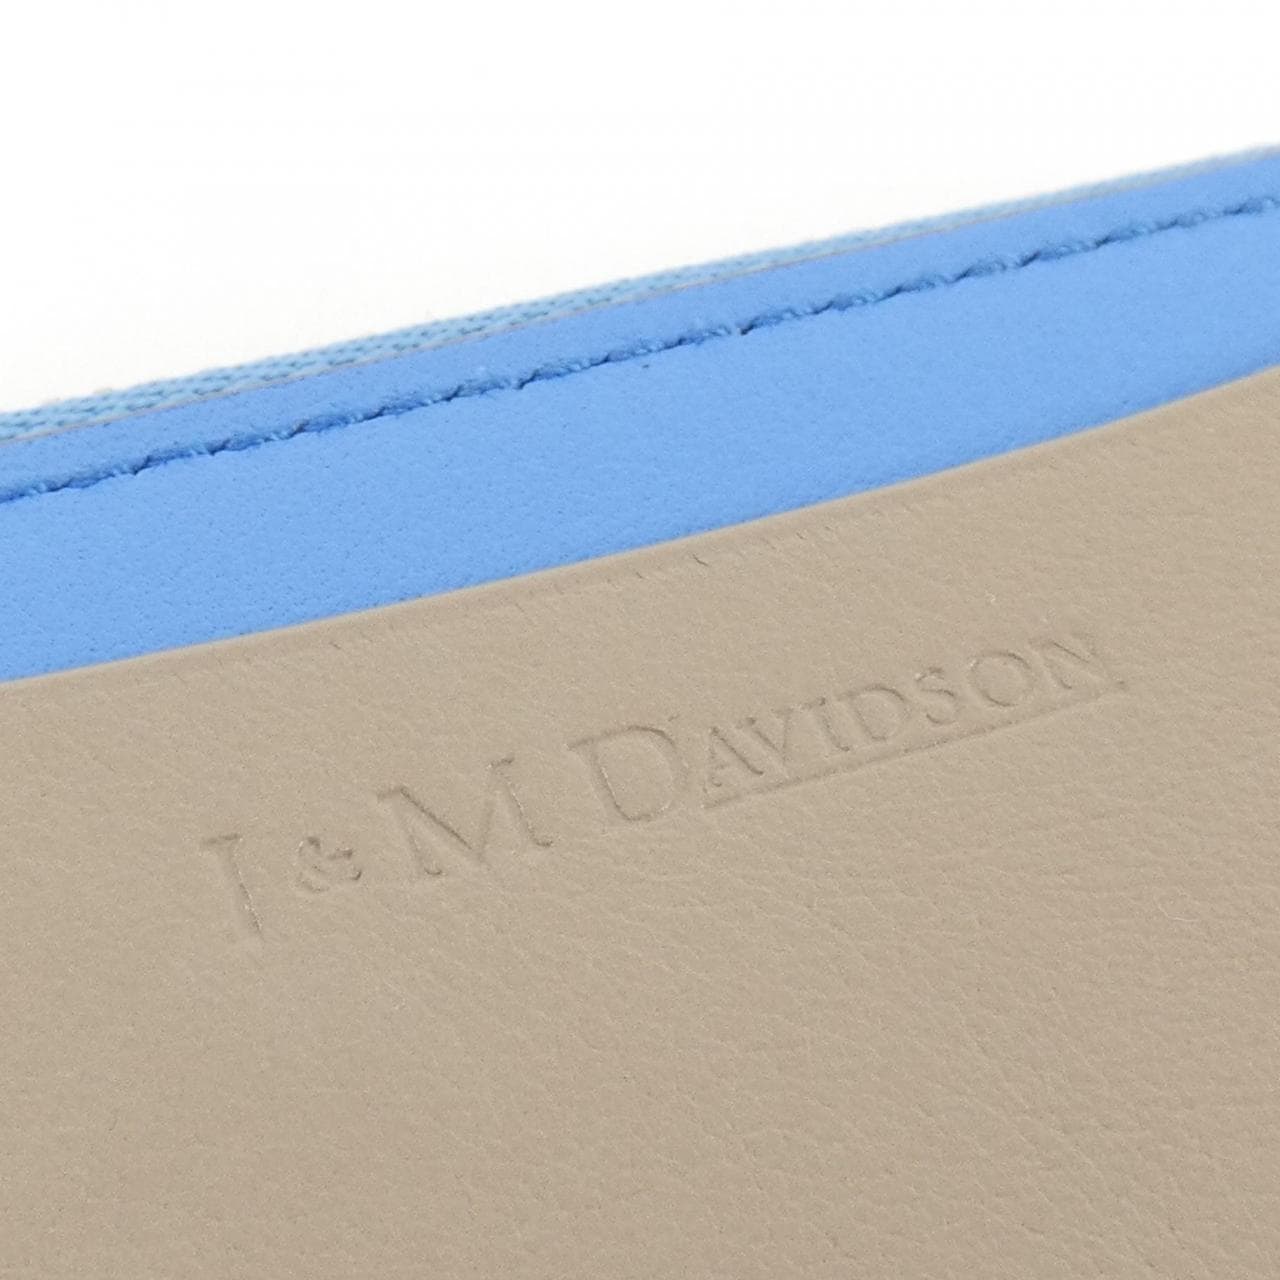 J&M DAVIDSON CARD CASE